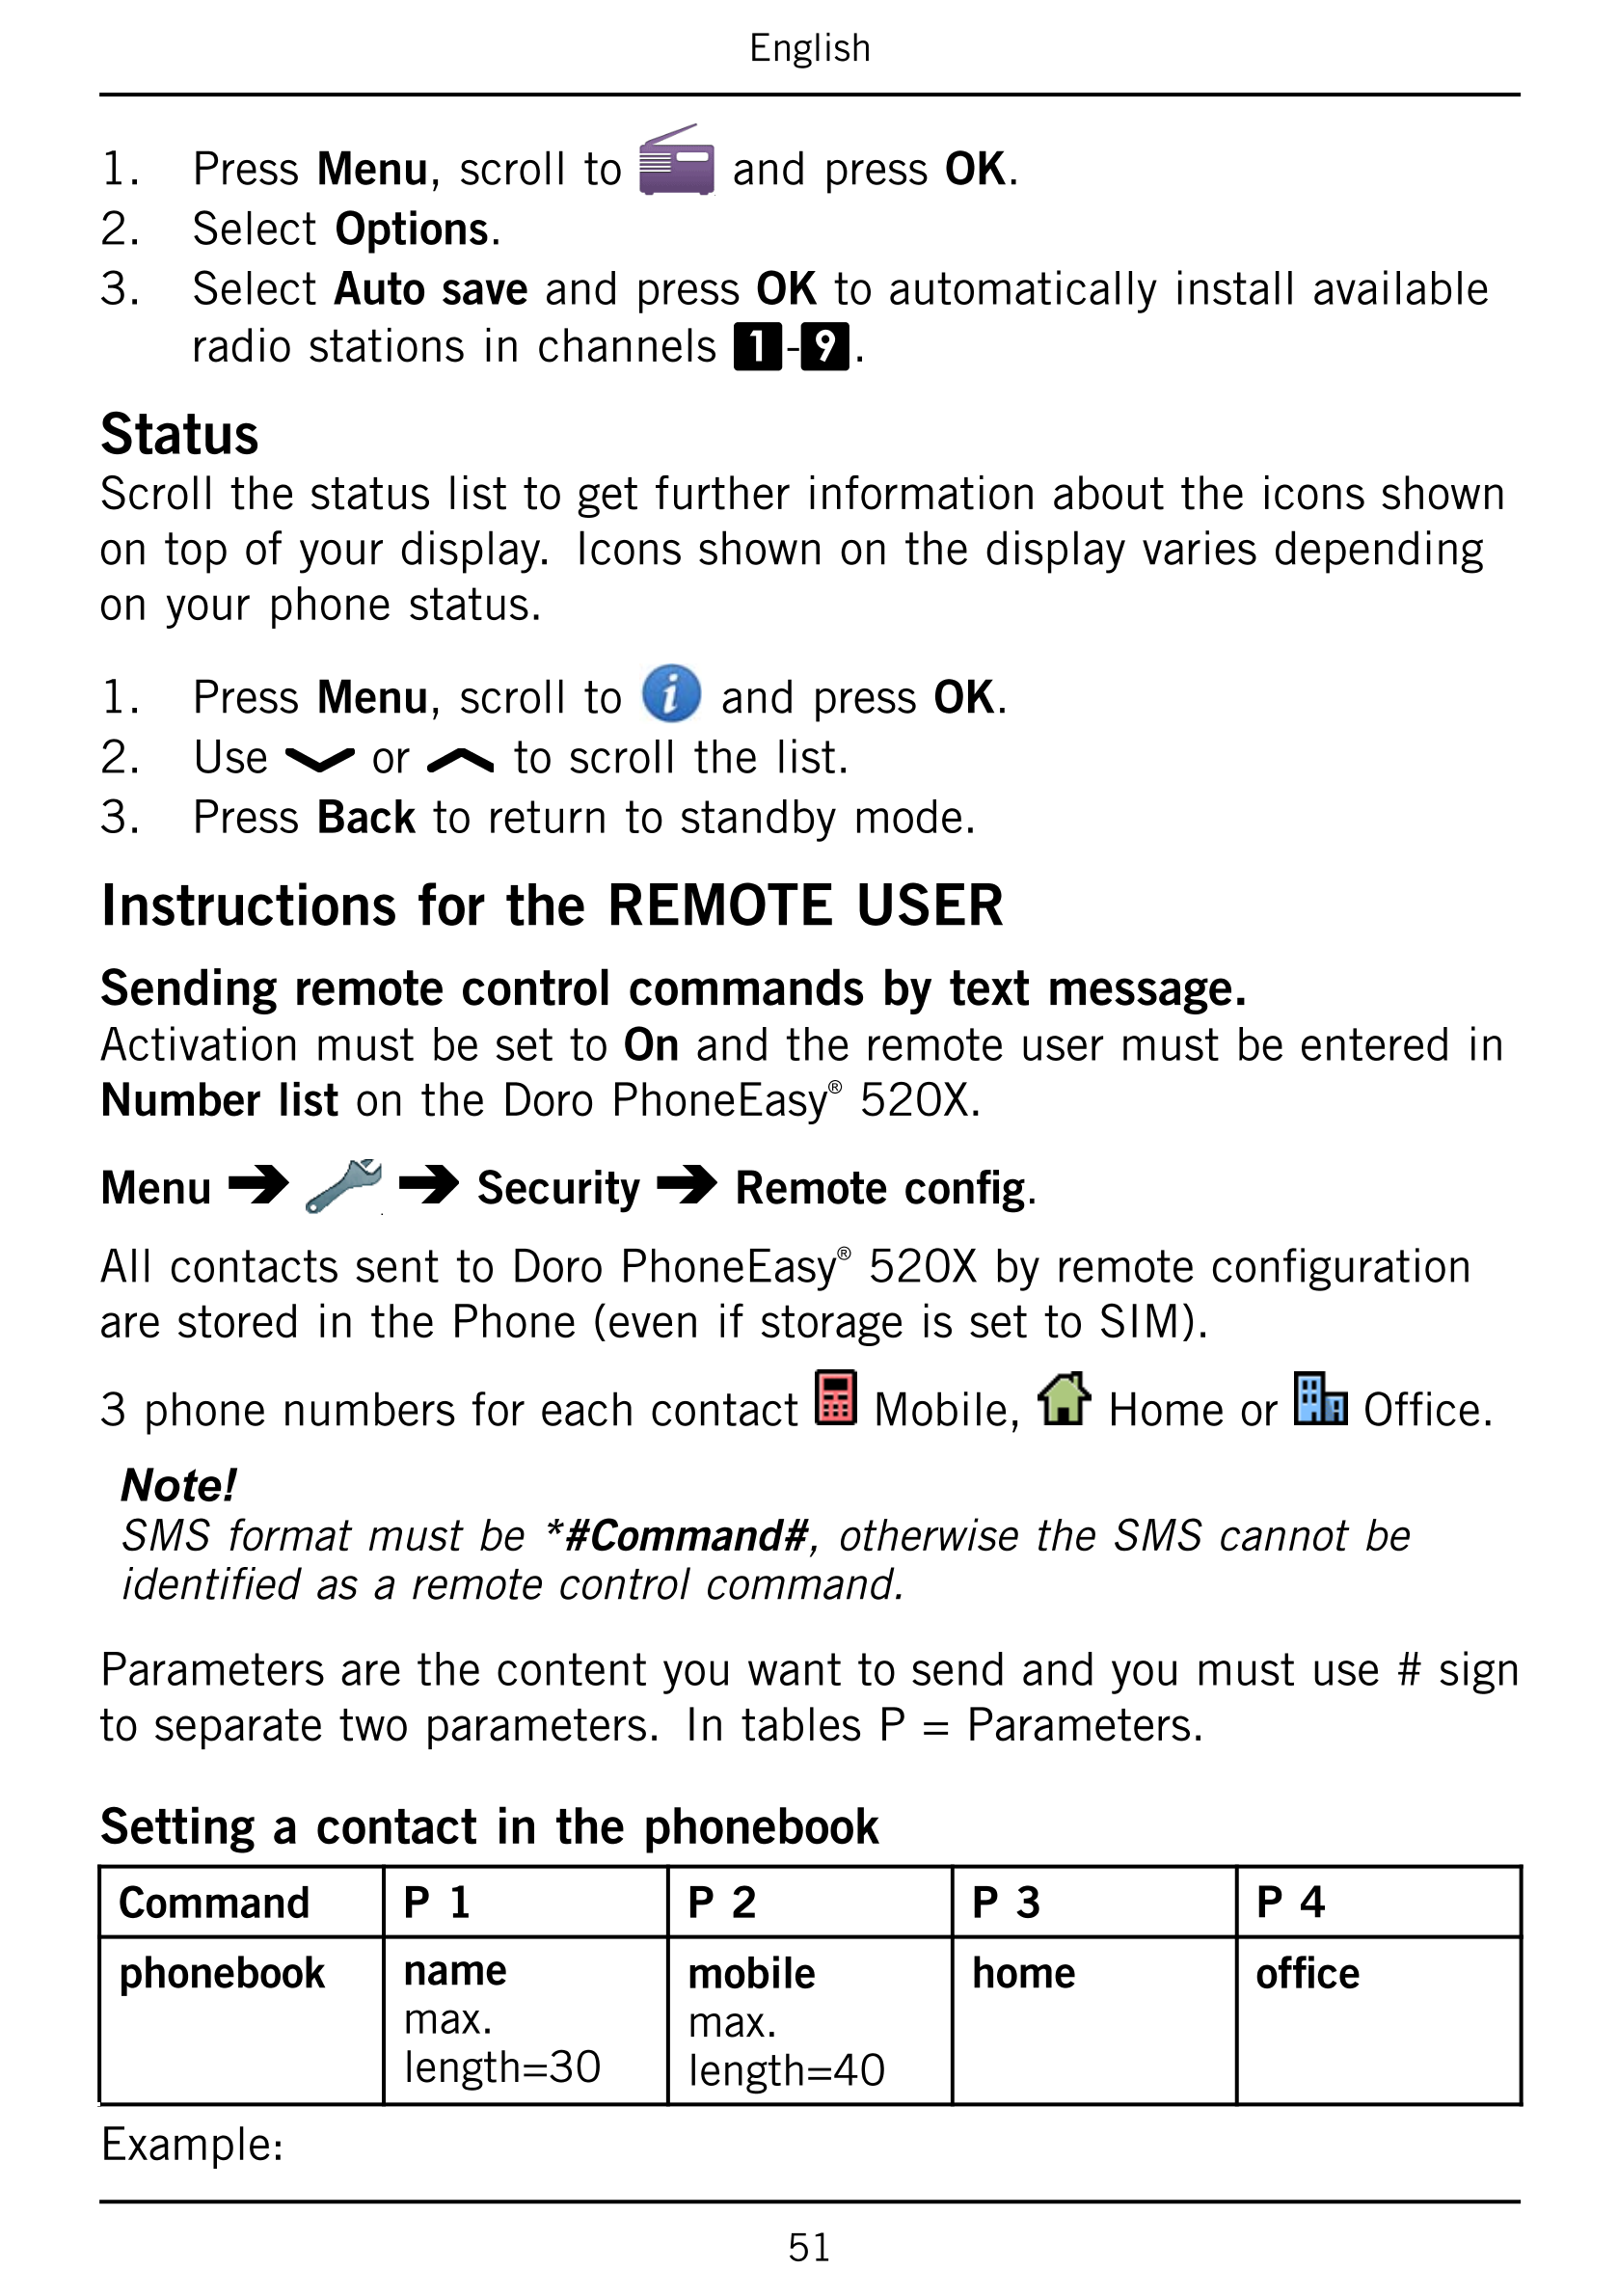 English
1.     Press Menu, scroll to and press OK.
2.     Select Options.
3.     Select Auto save and press OK to automatically 